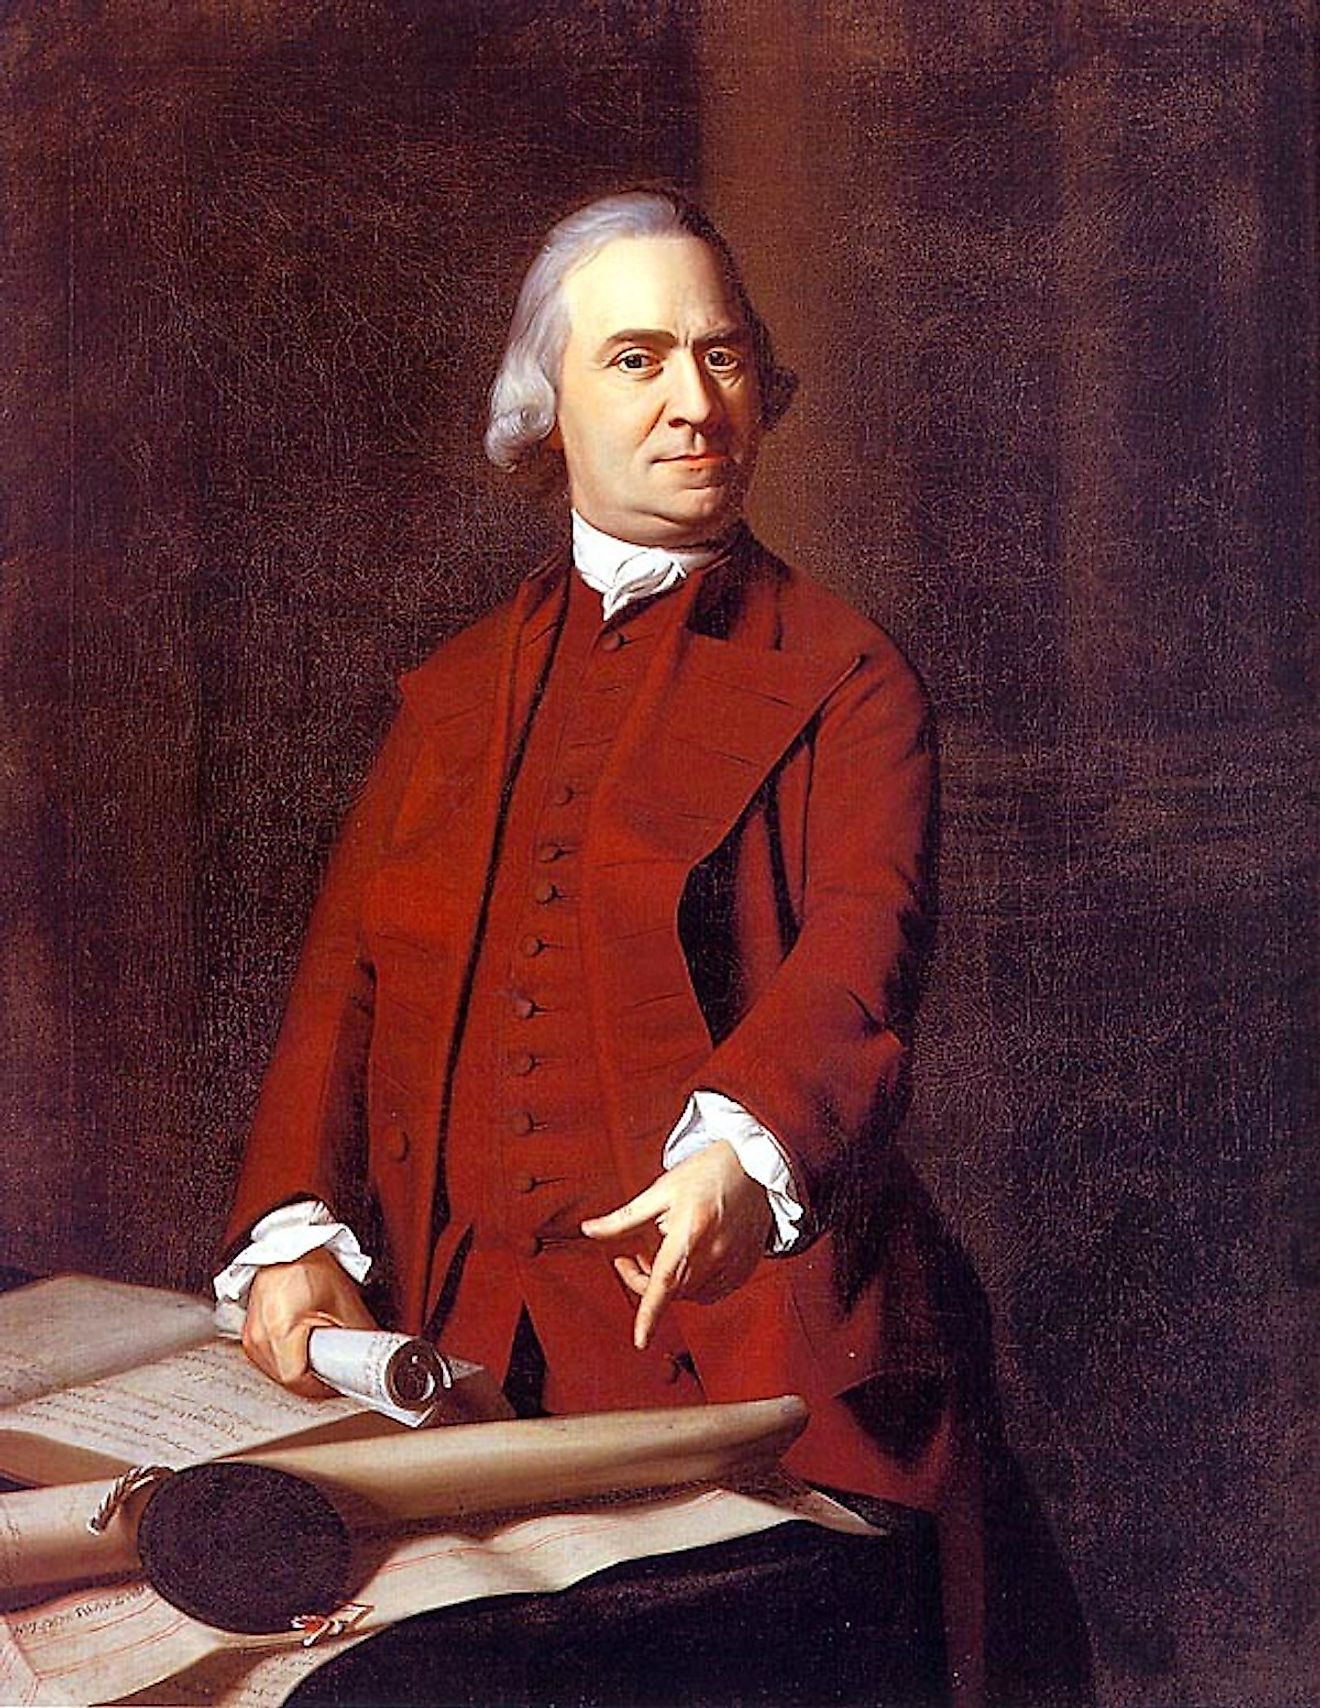 A portrait of Samuel Adams. Image credit: John Singleton Copley/Public domain